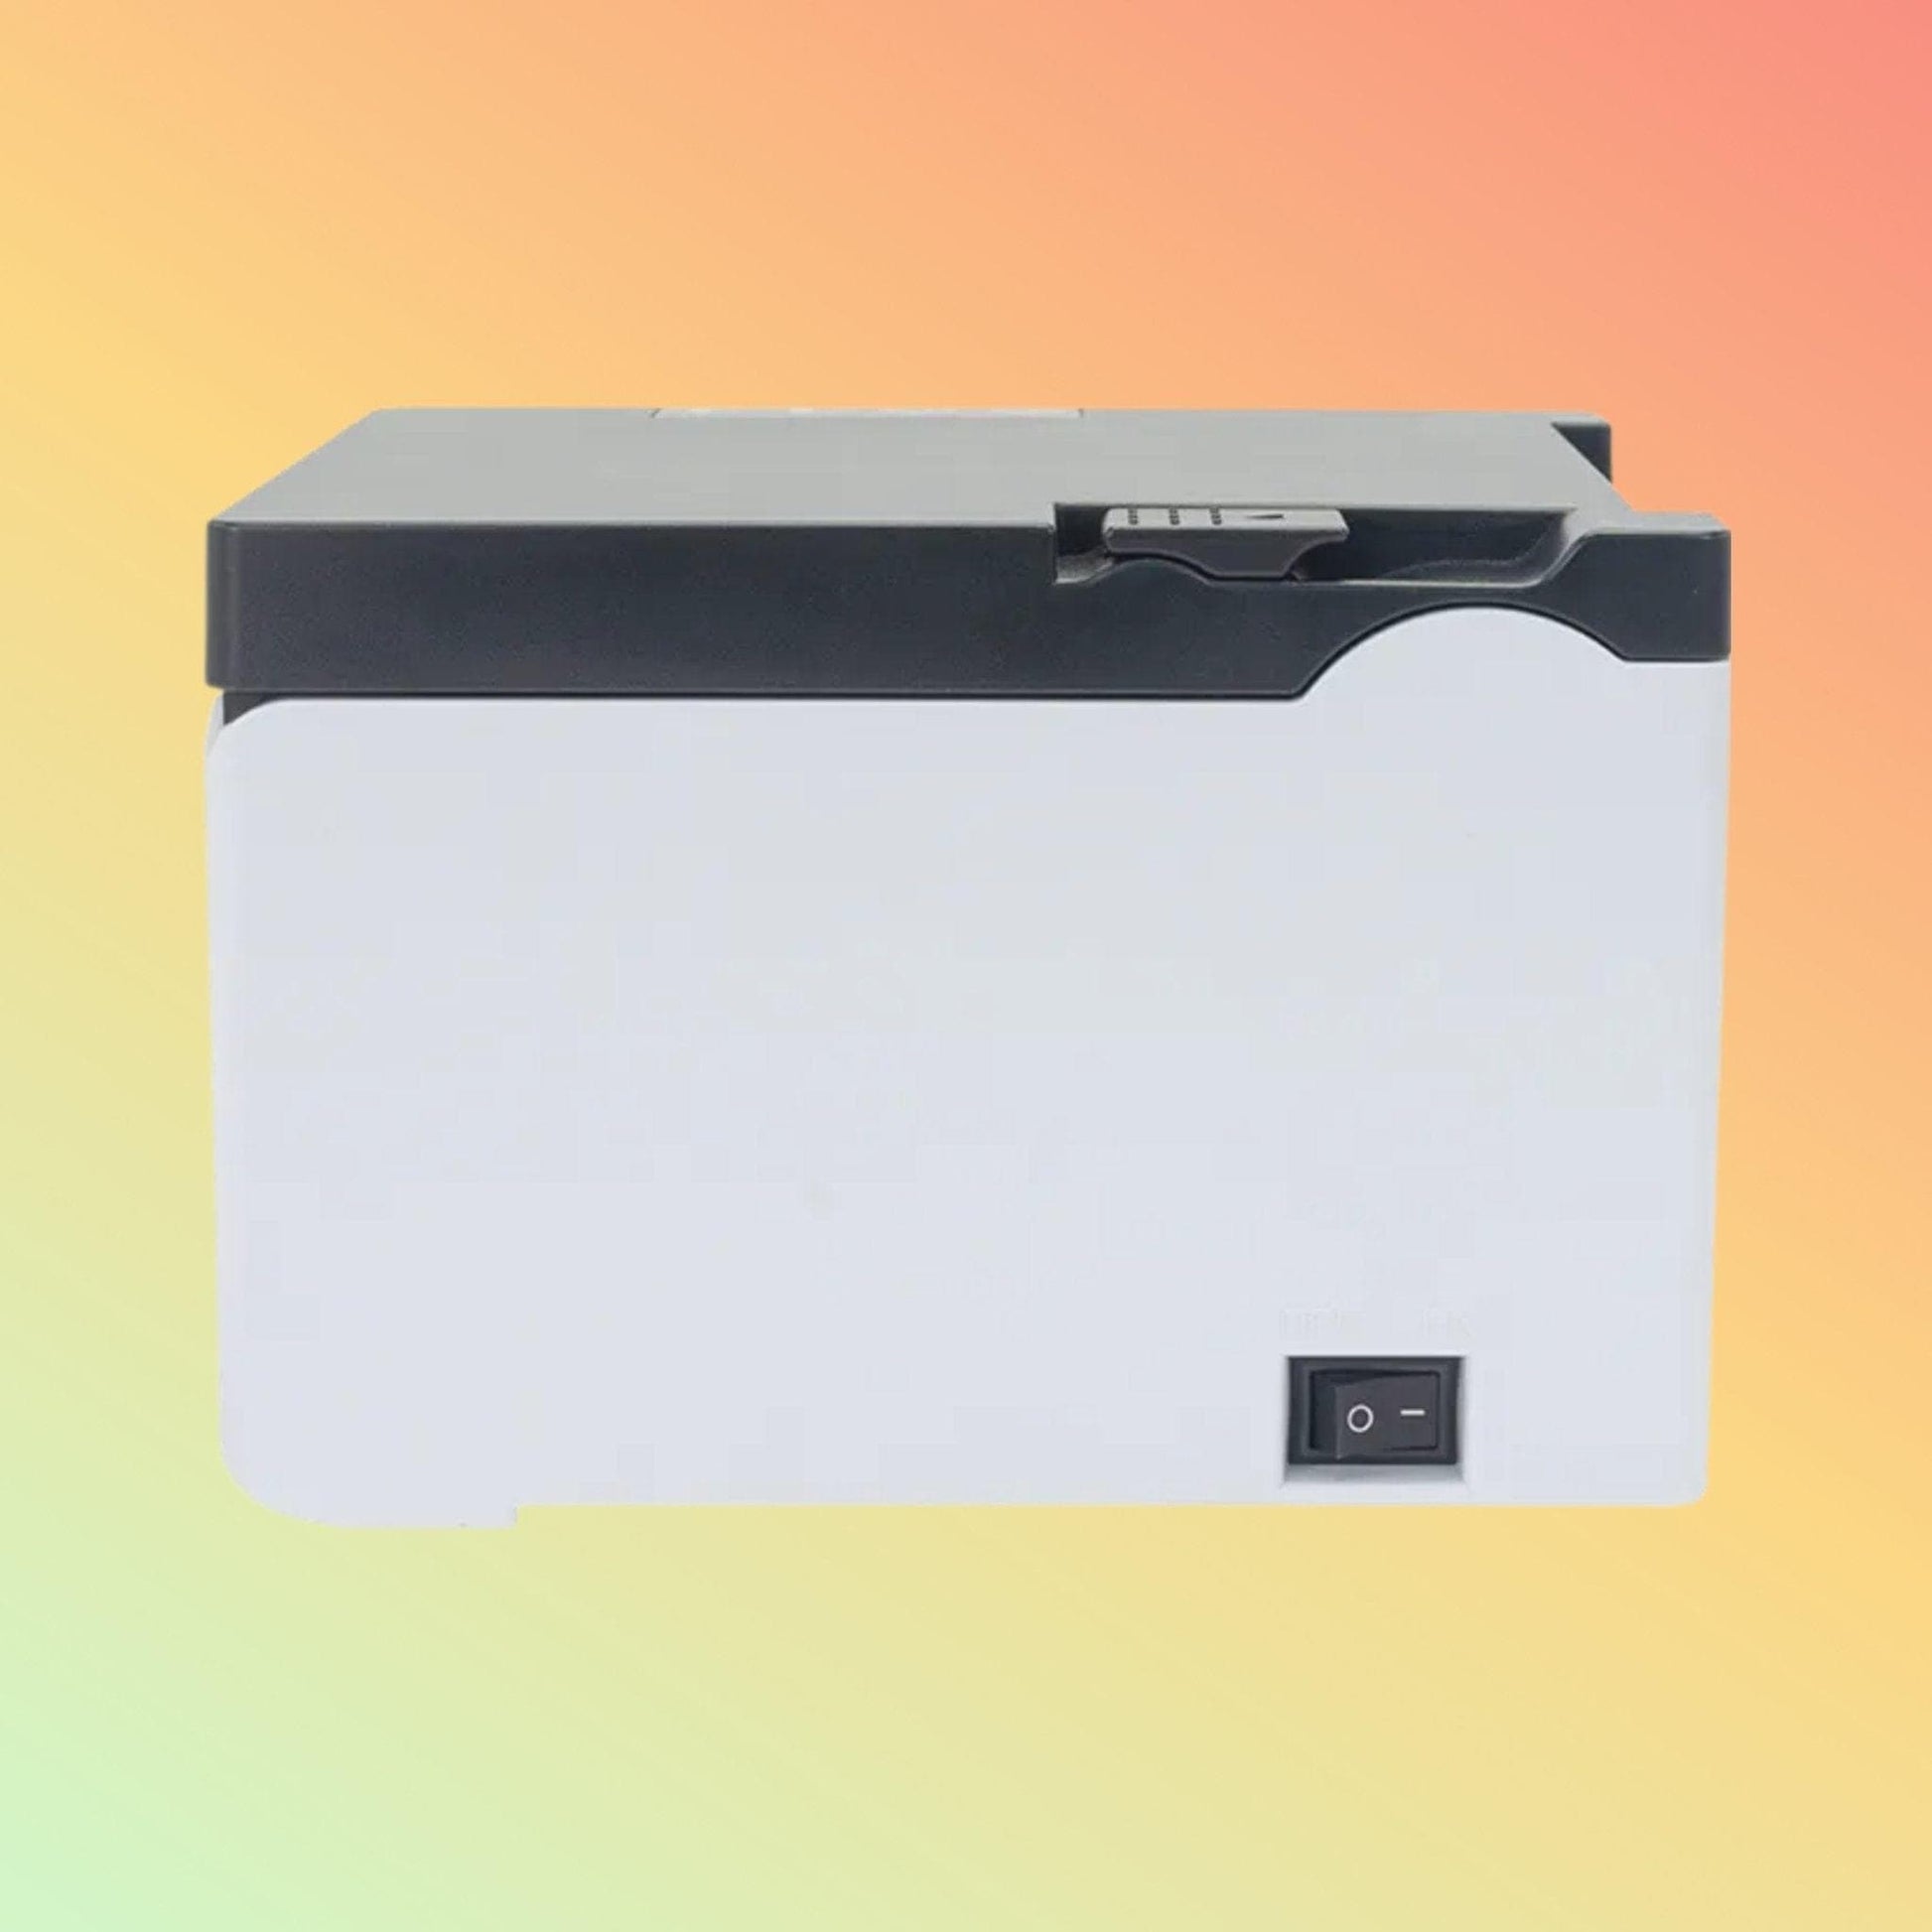 neotech.ae label printer XP-Q302F Label Printer